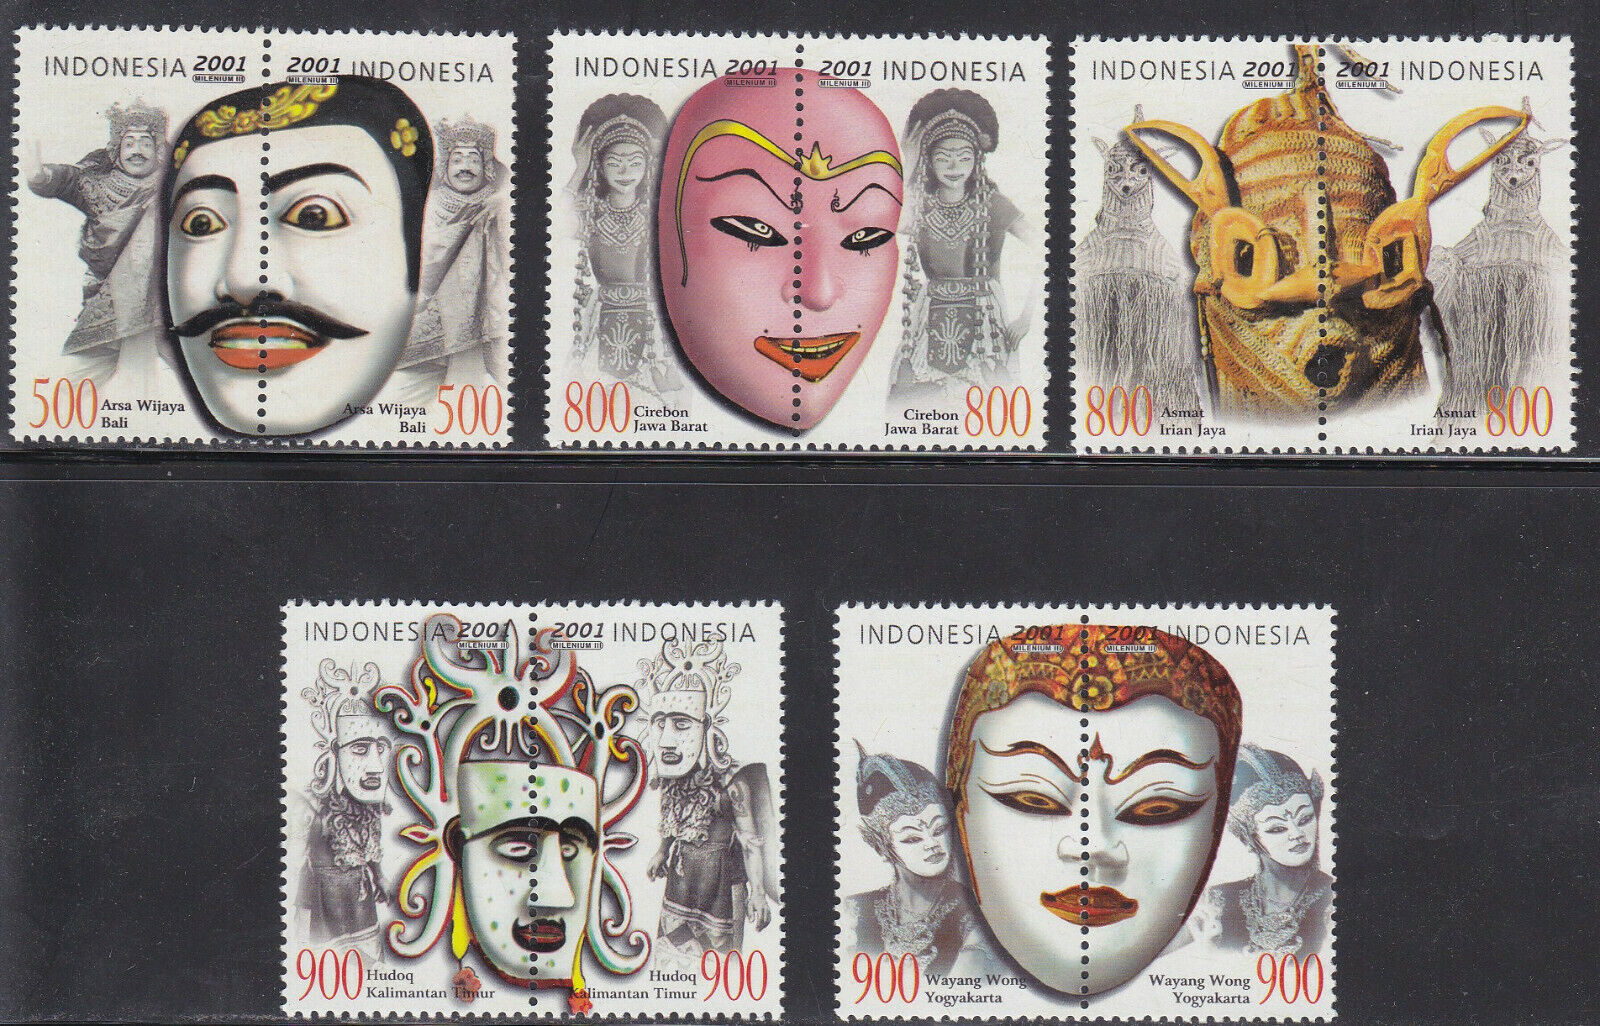 Indonesia - Indonesie Issue 2001 (2161-2170) Masks